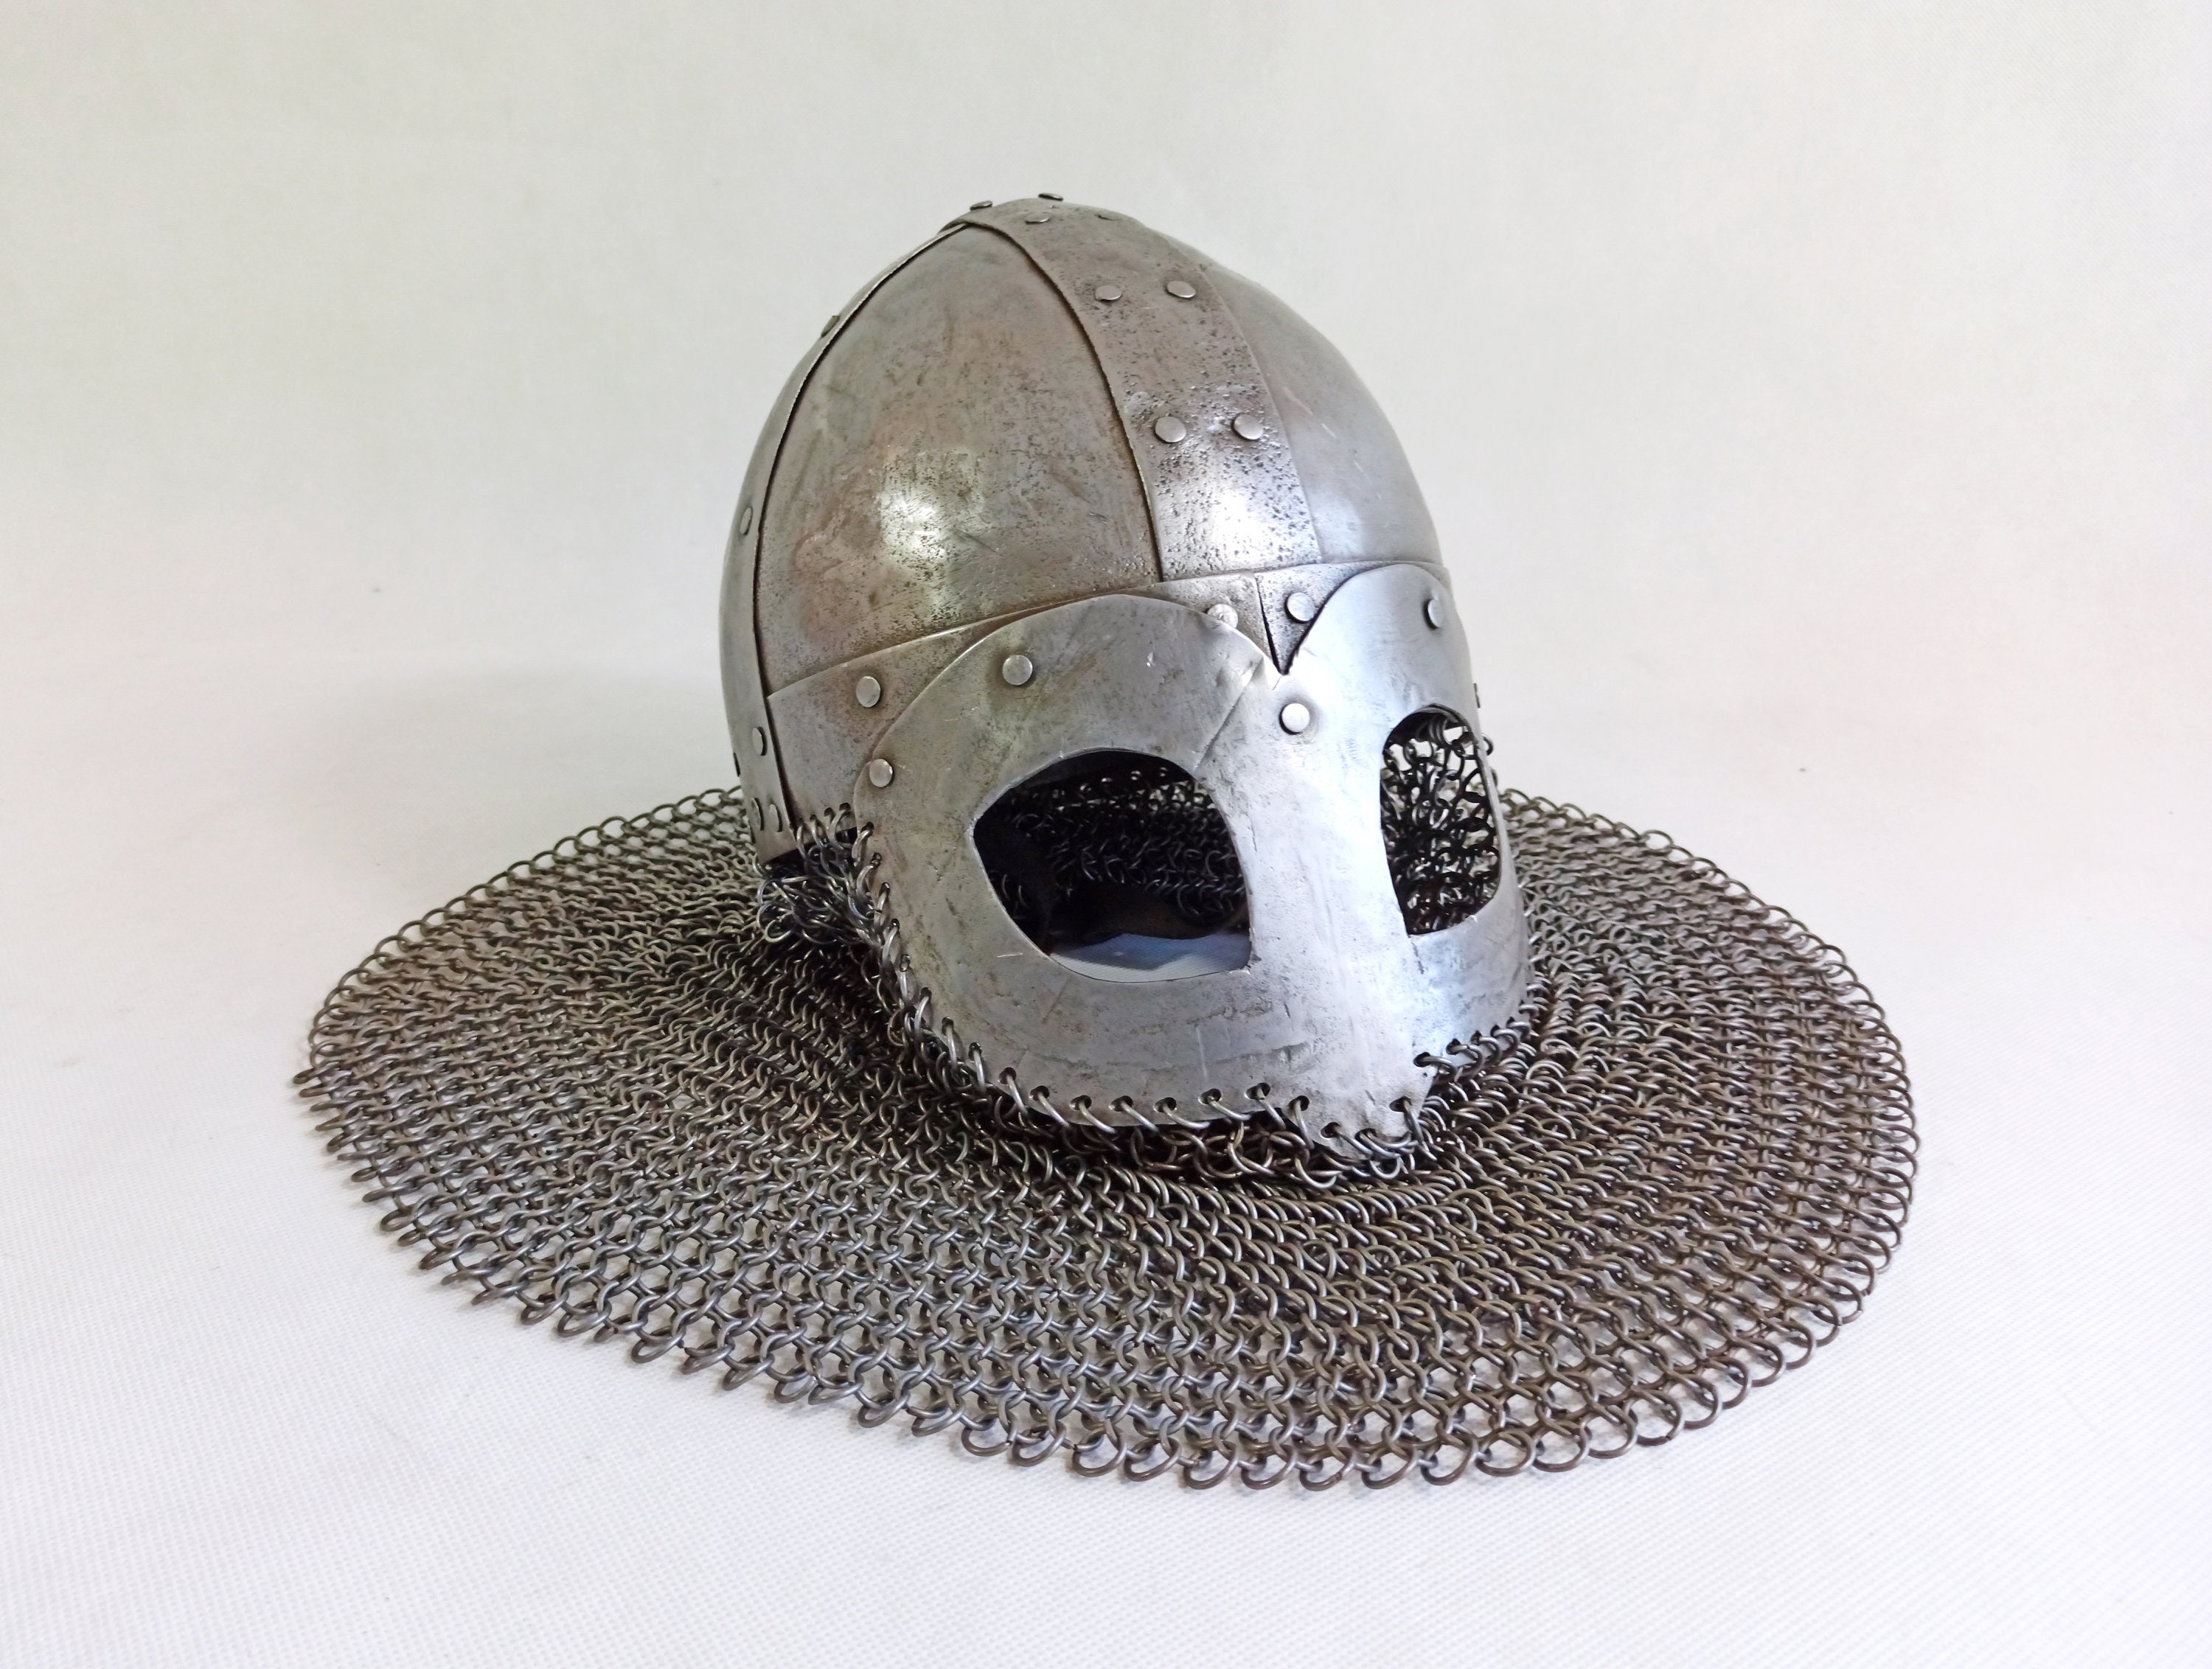 Details about   Medieval Armour Steel Viking Gjermundbu Mask Helmet Costume Helmet With Stand 